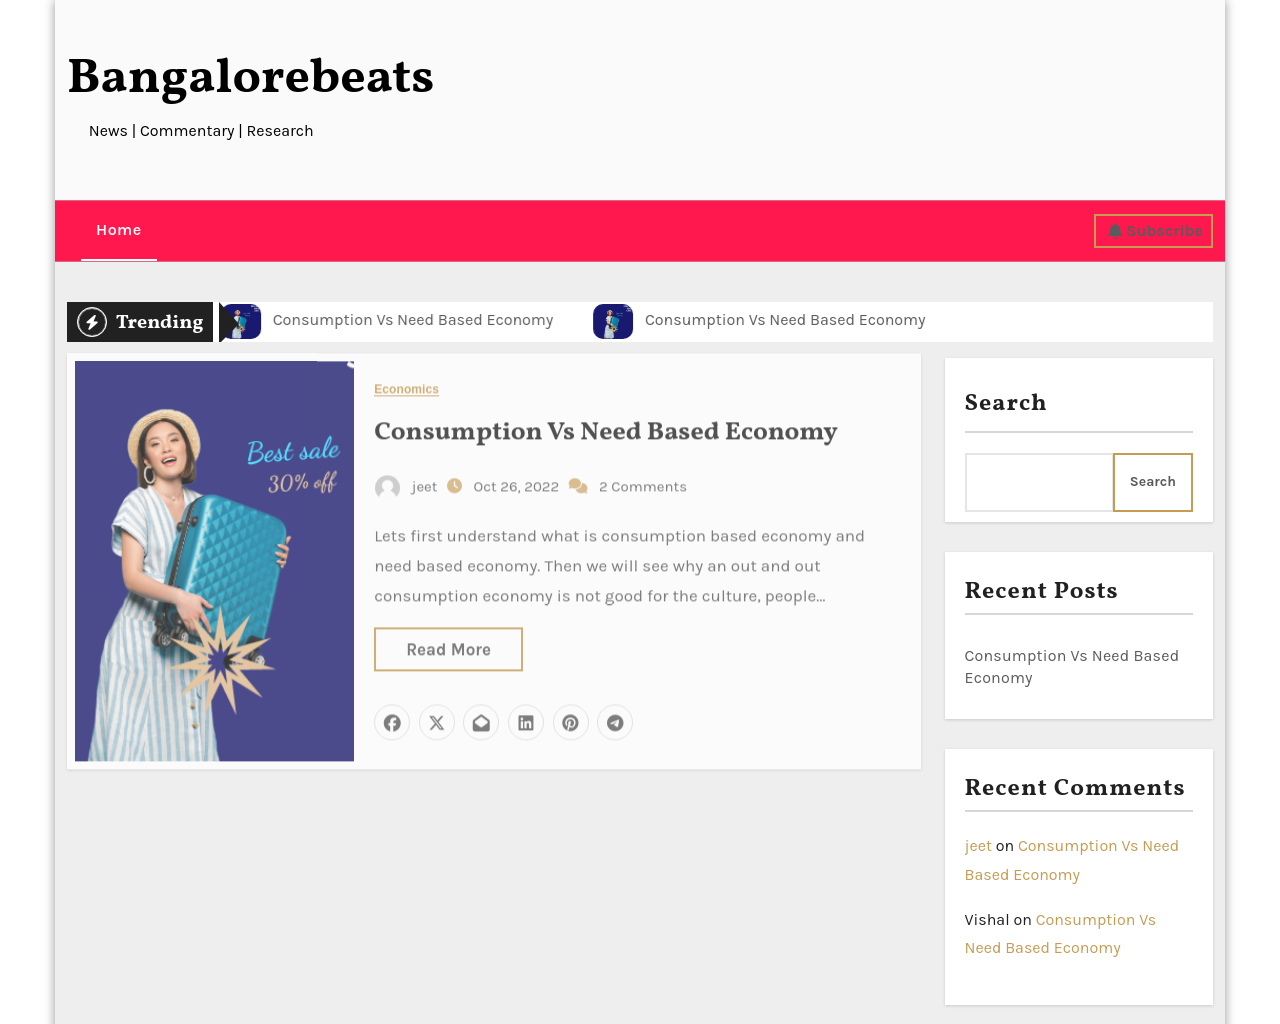 bangalorebeats.com